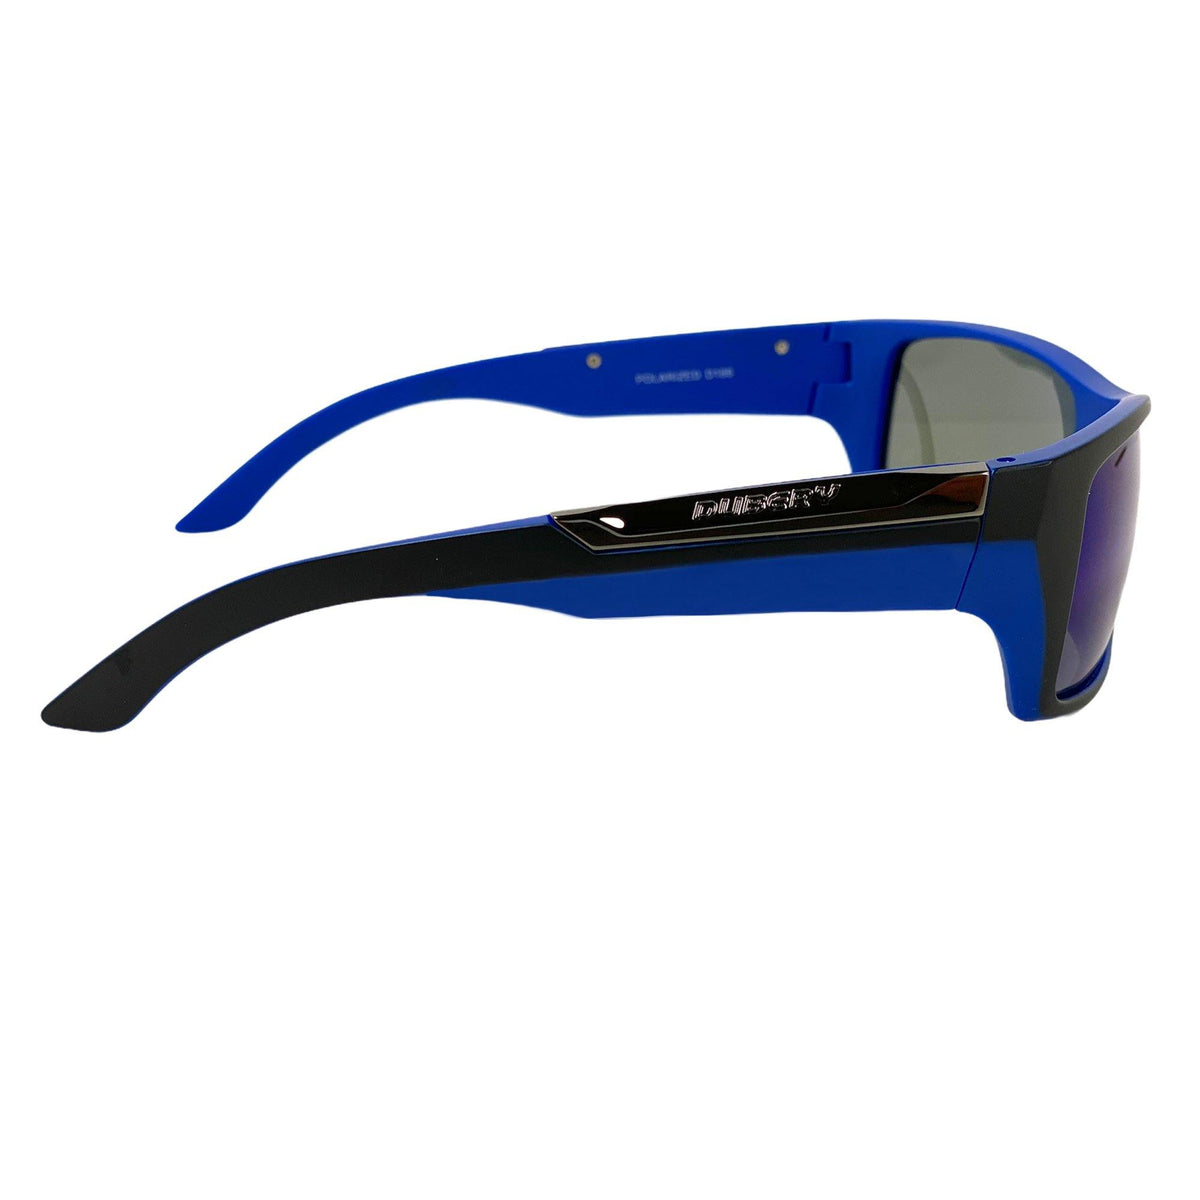 DUBERY Large Polarized Sport Sunglasses Men Oversize Cycling Windproof  Goggles